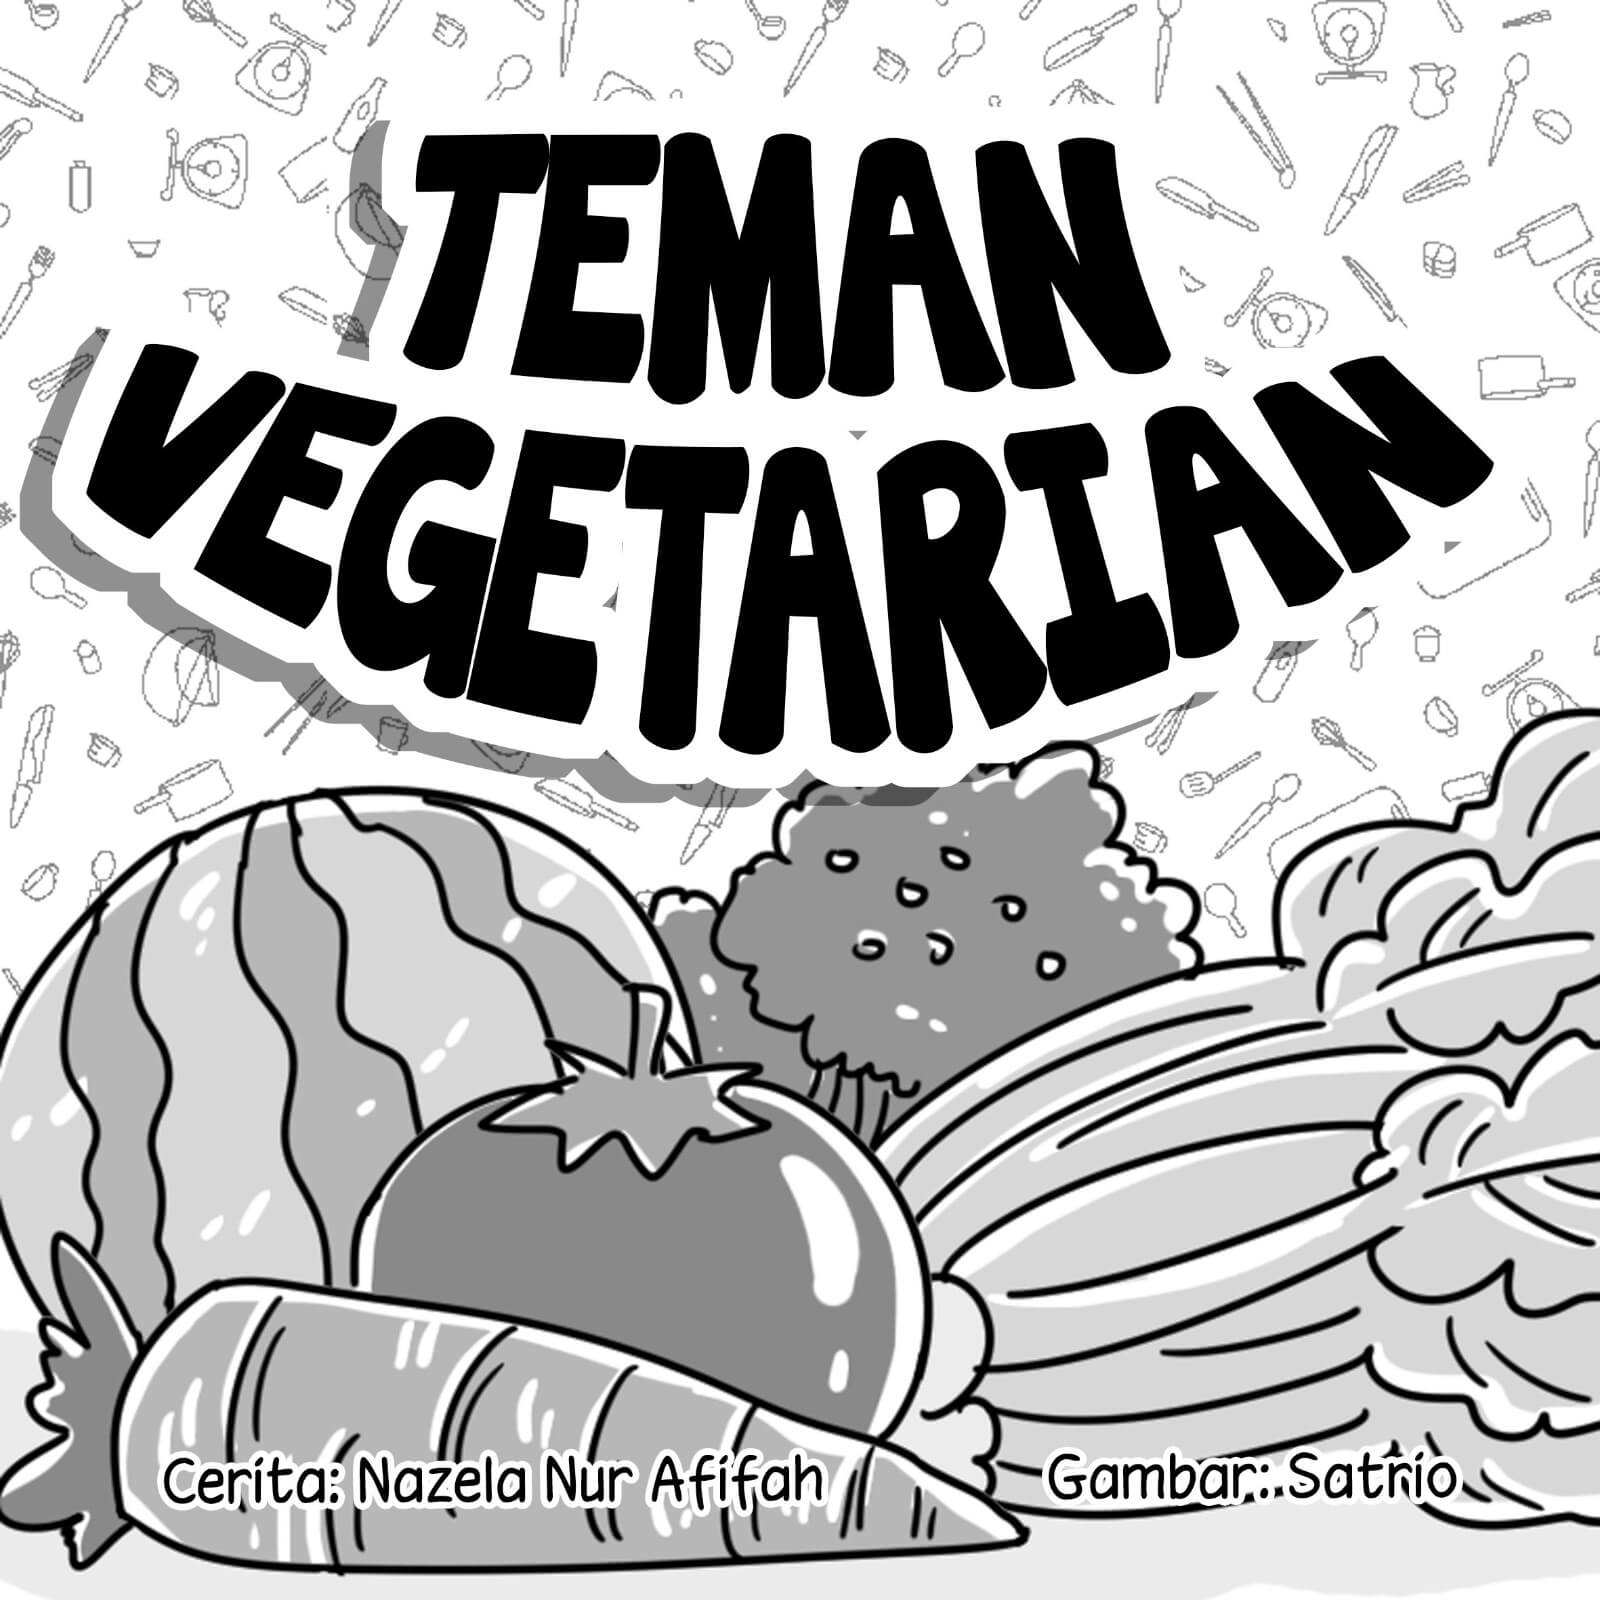 Teman Vegetarian cover bw